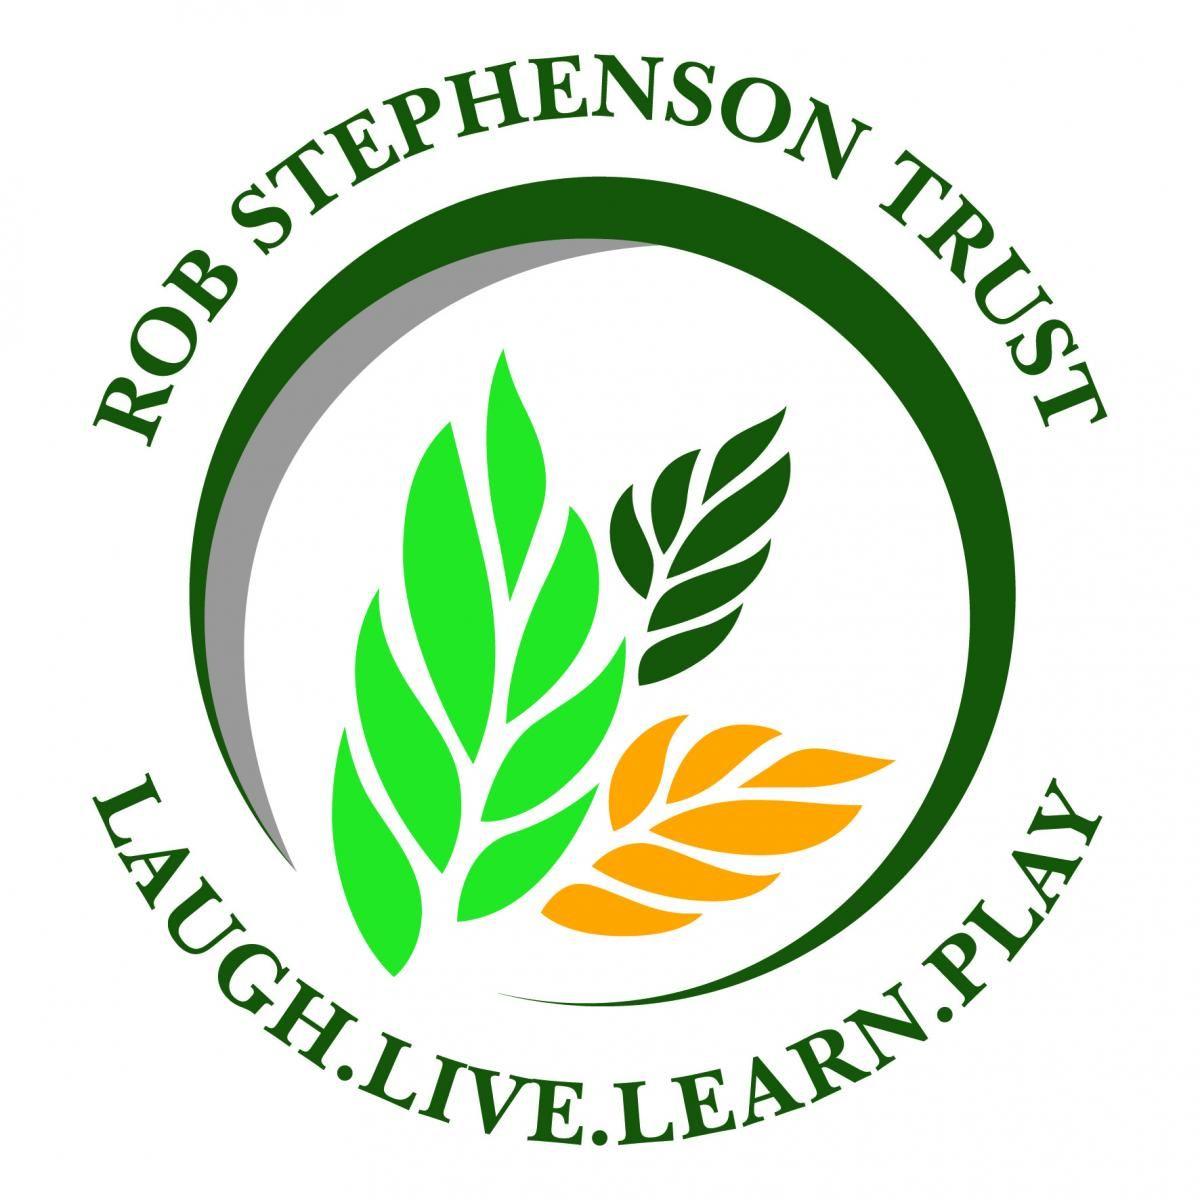 Stephenson Logo - Robert Stephenson trust fund raises £12,000 in first week | York Press